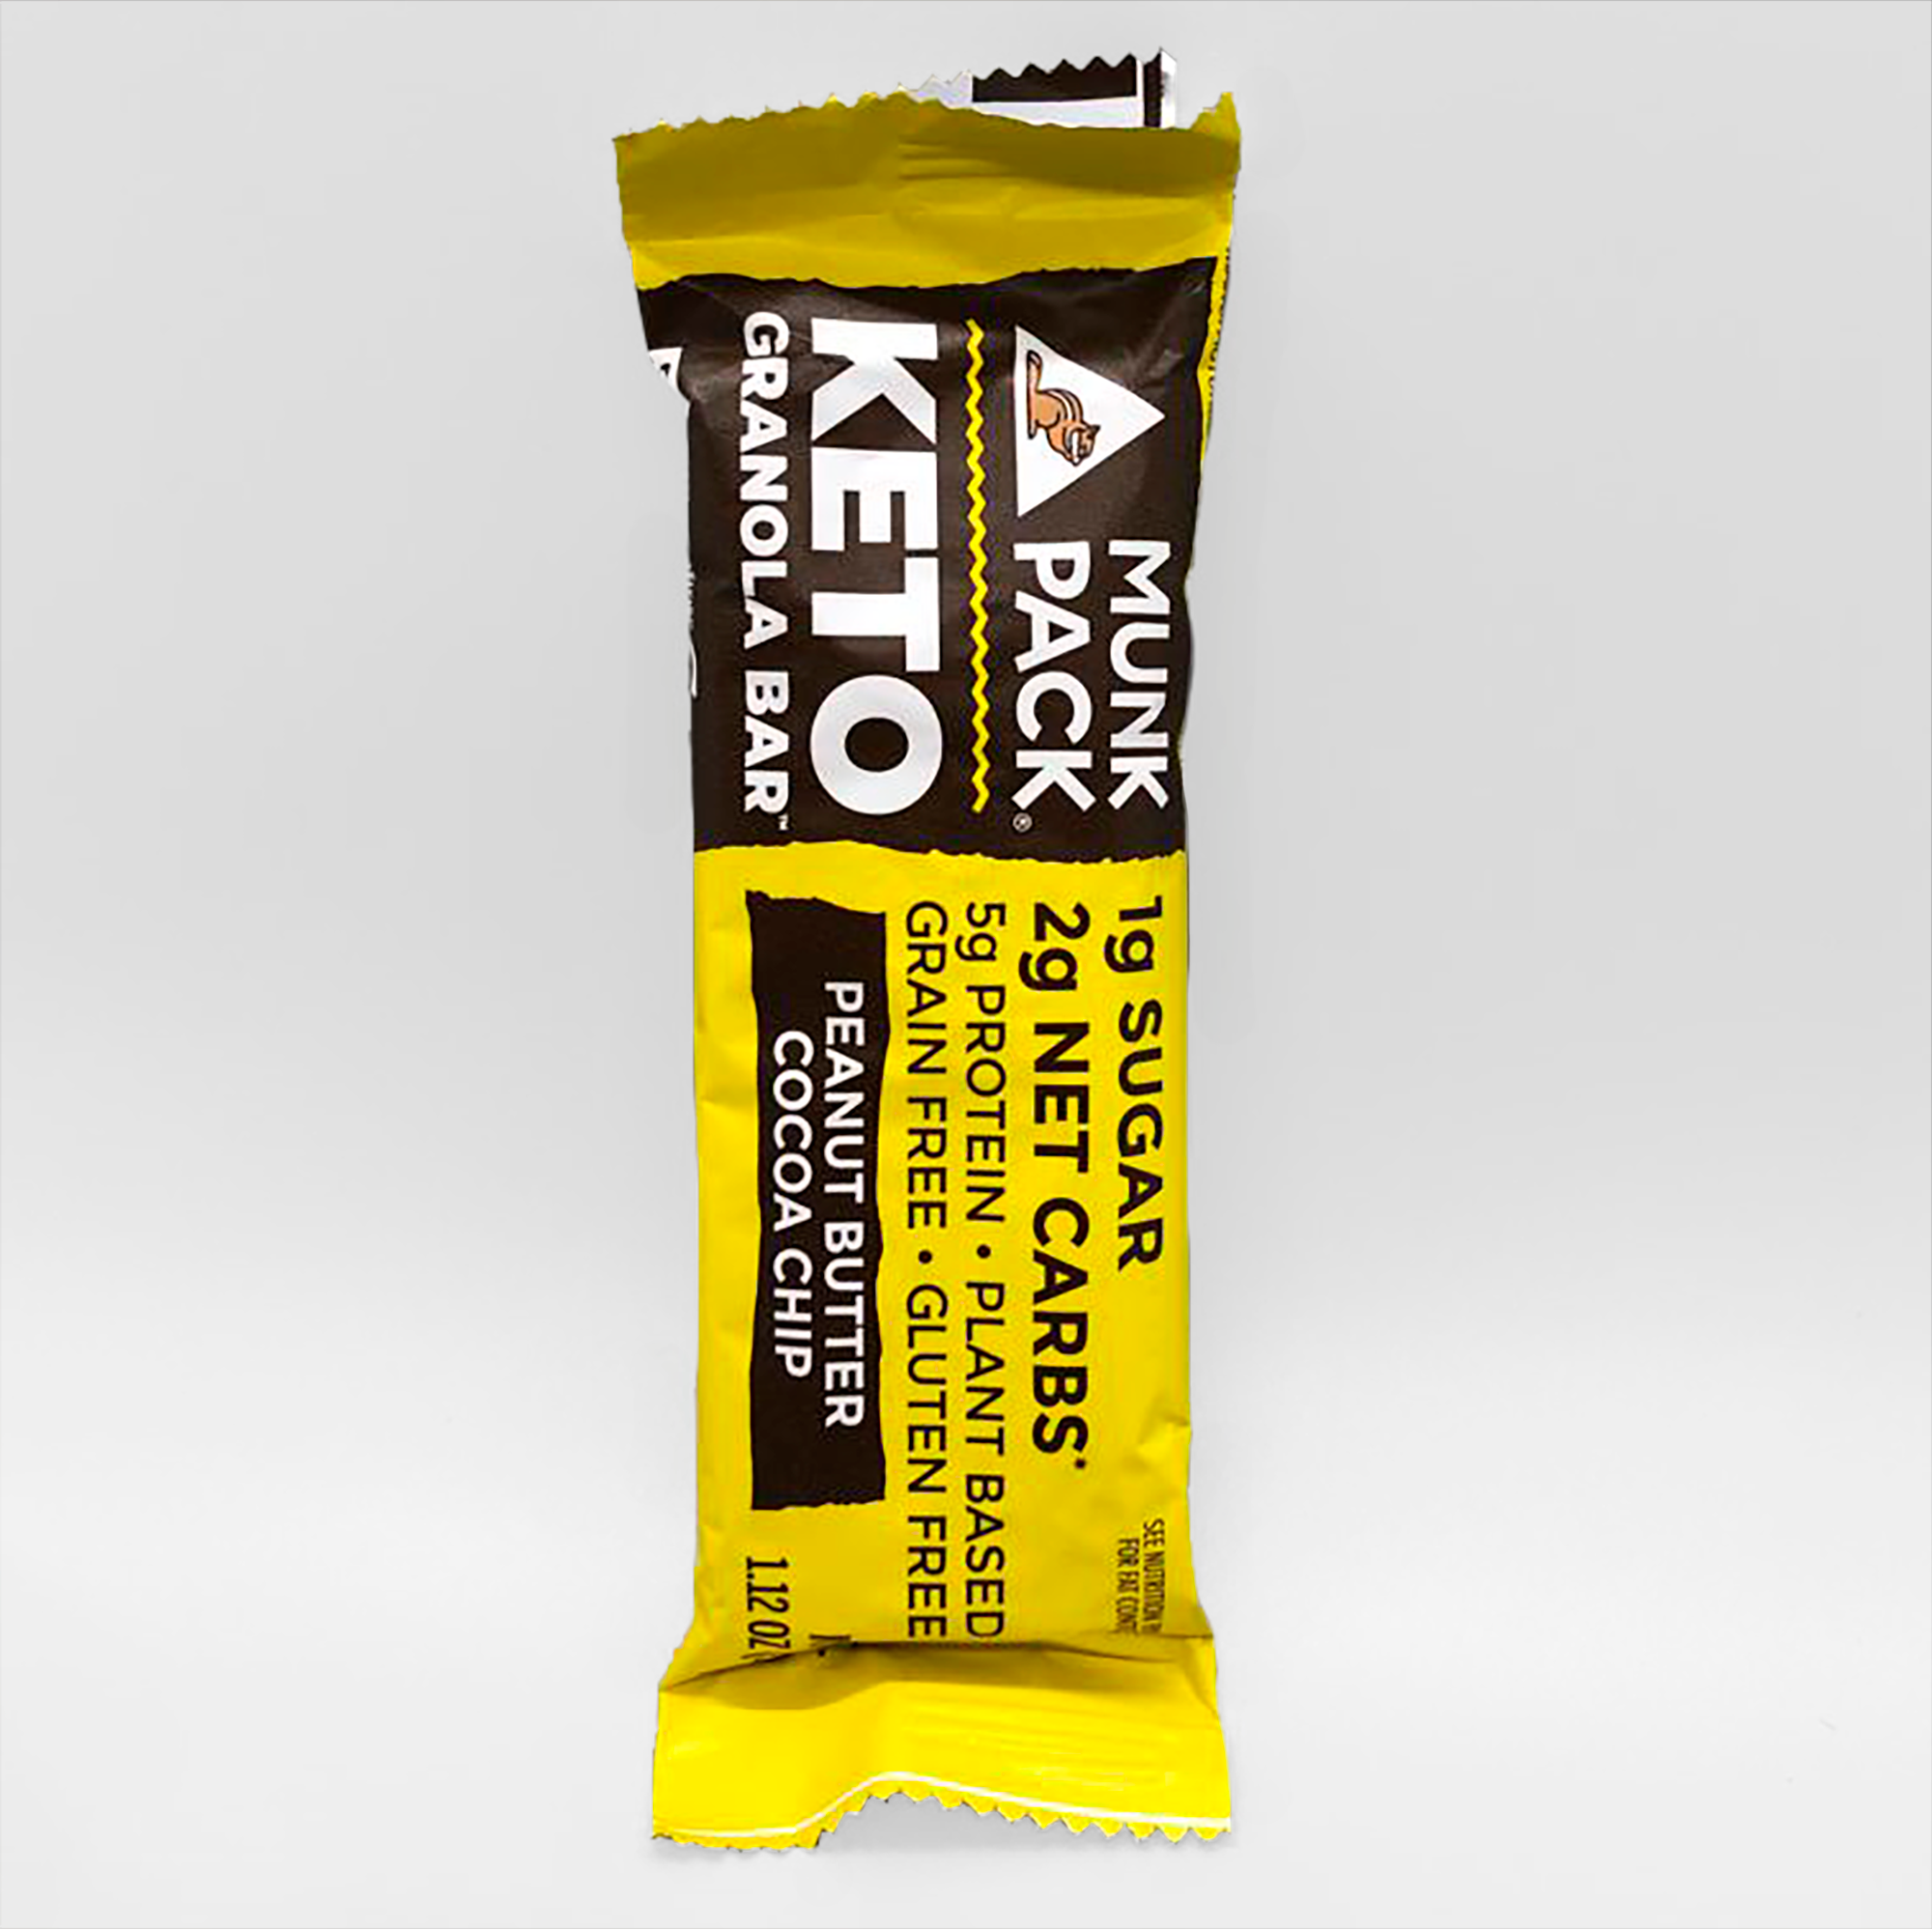 Peanut Butter Keto Granola Bar, 12-Pack exclusive at Tastermonial